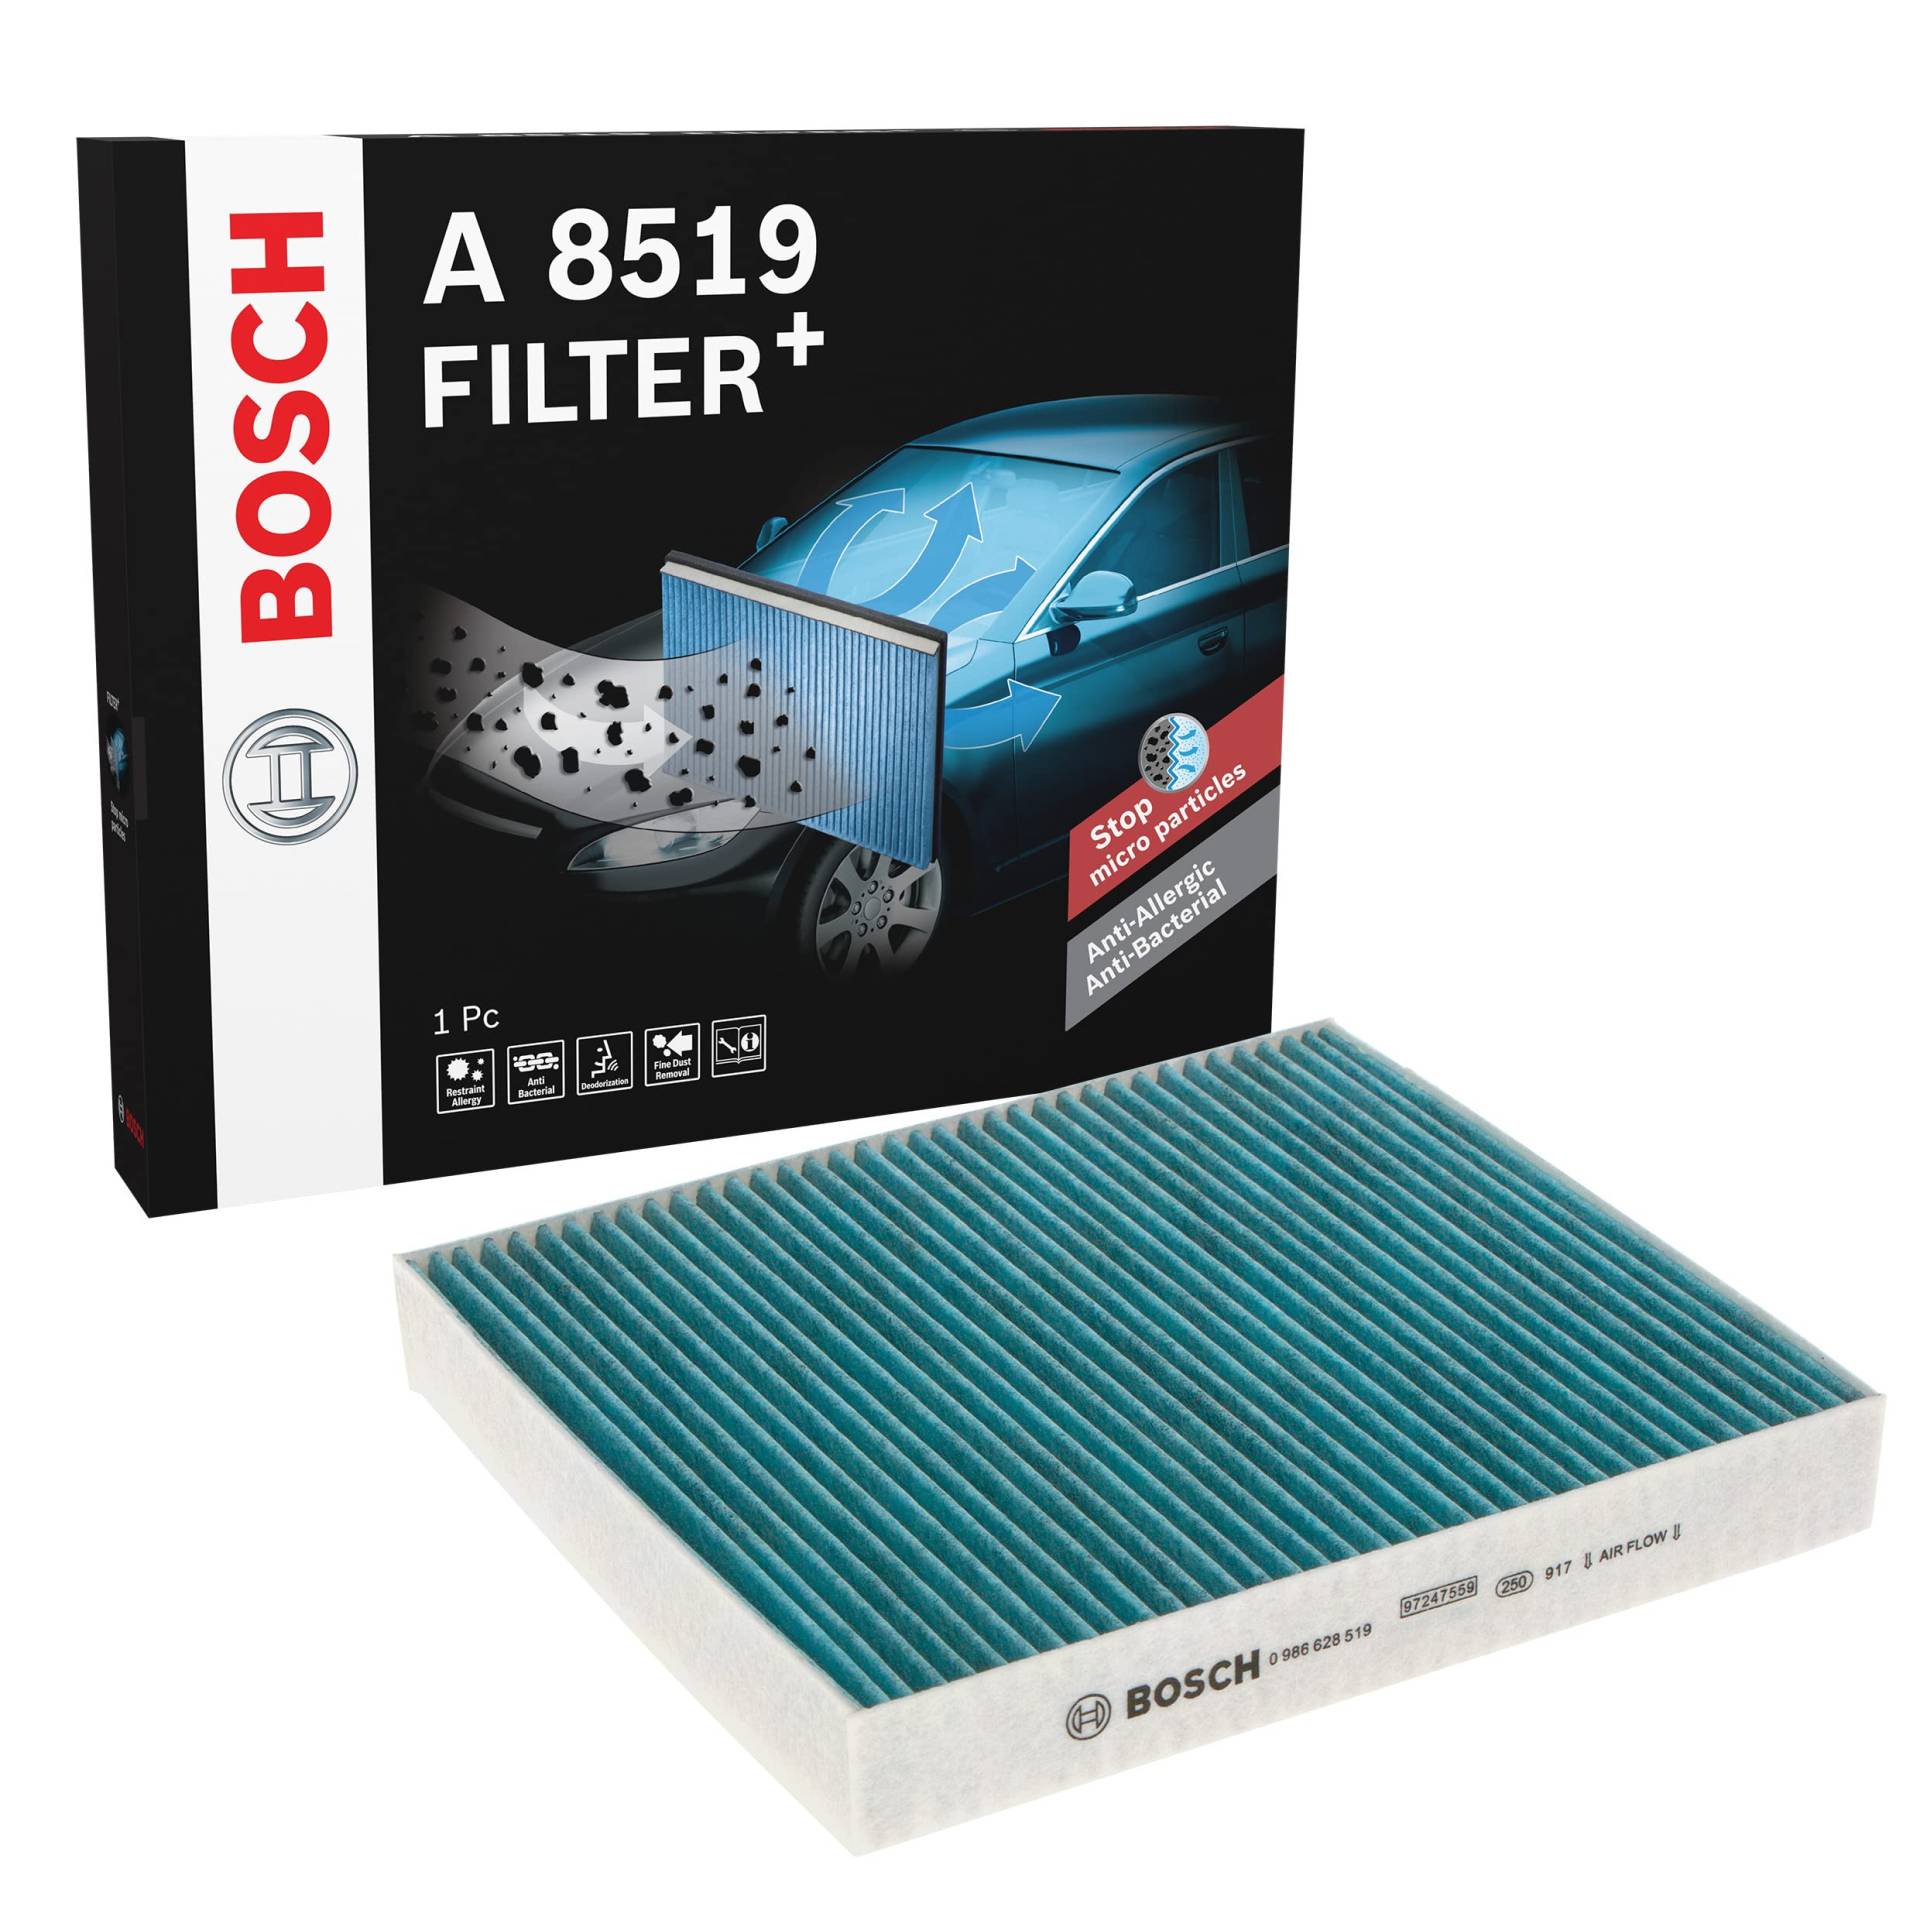 Bosch A8519 - Innenraumfilter Filter+ von Bosch Automotive